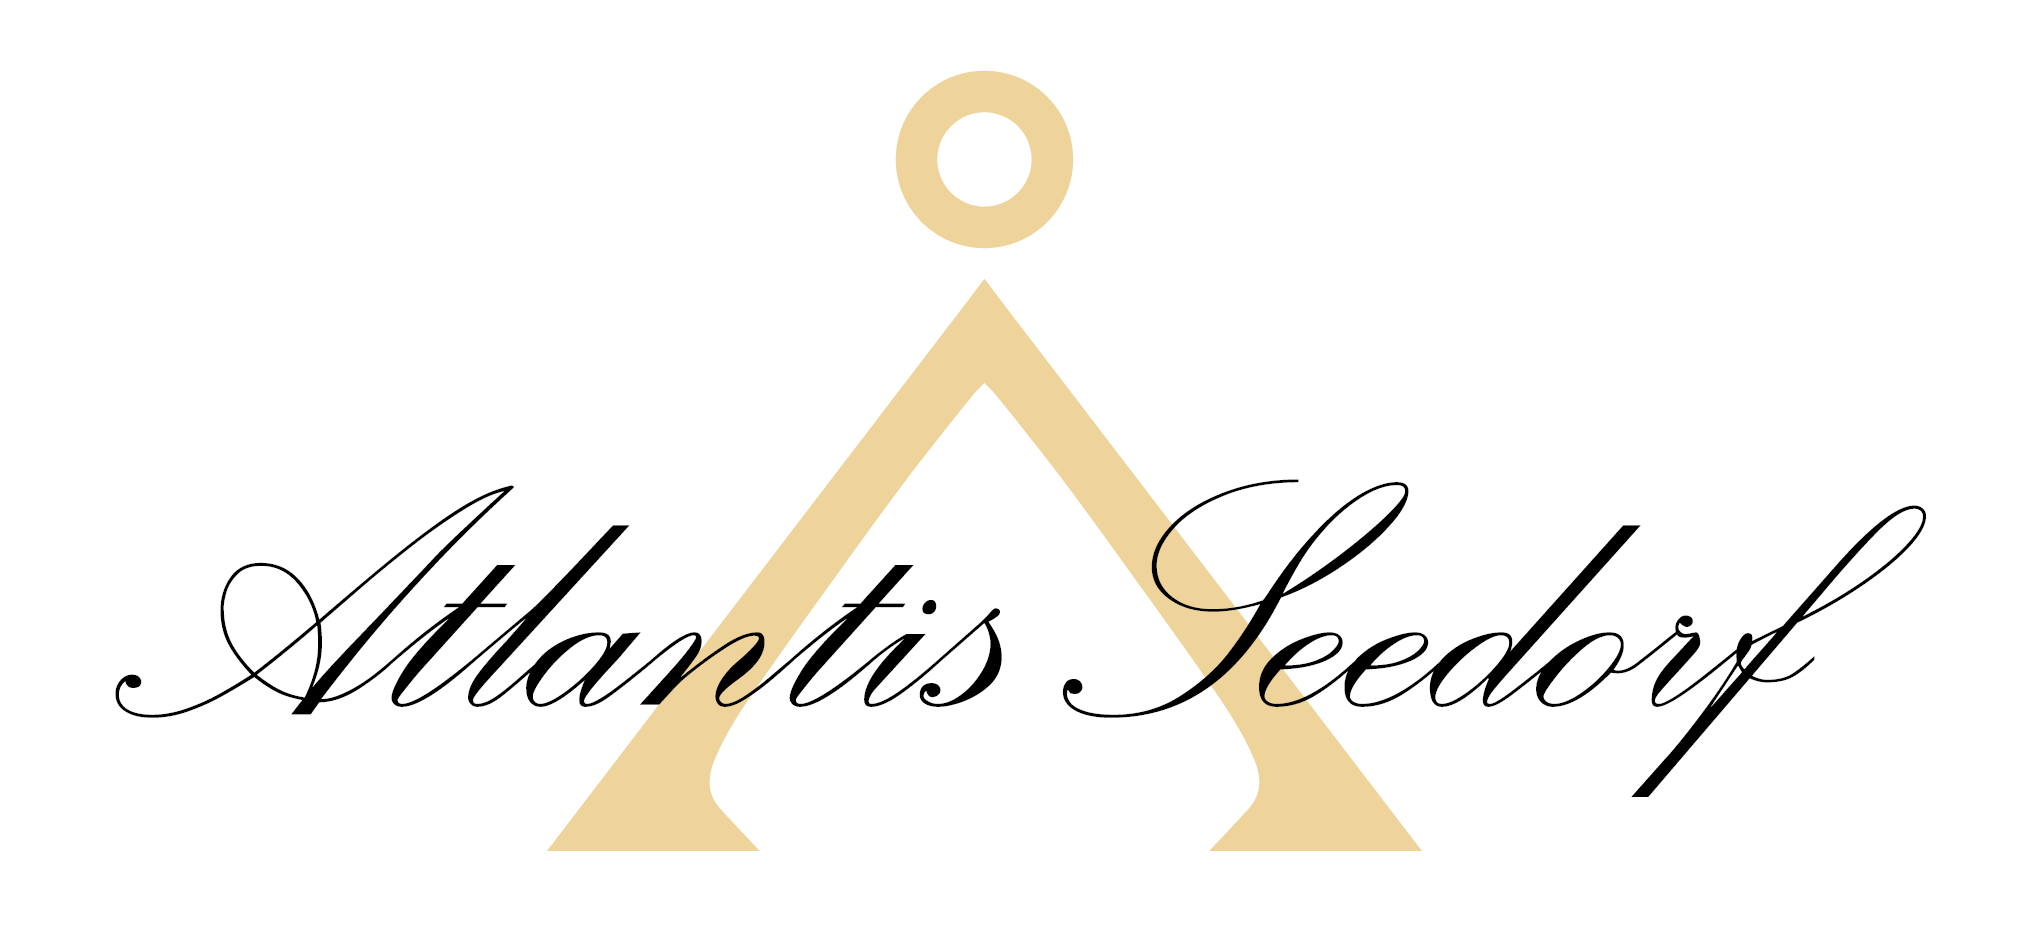 Atlantis-Seedorf GmbH